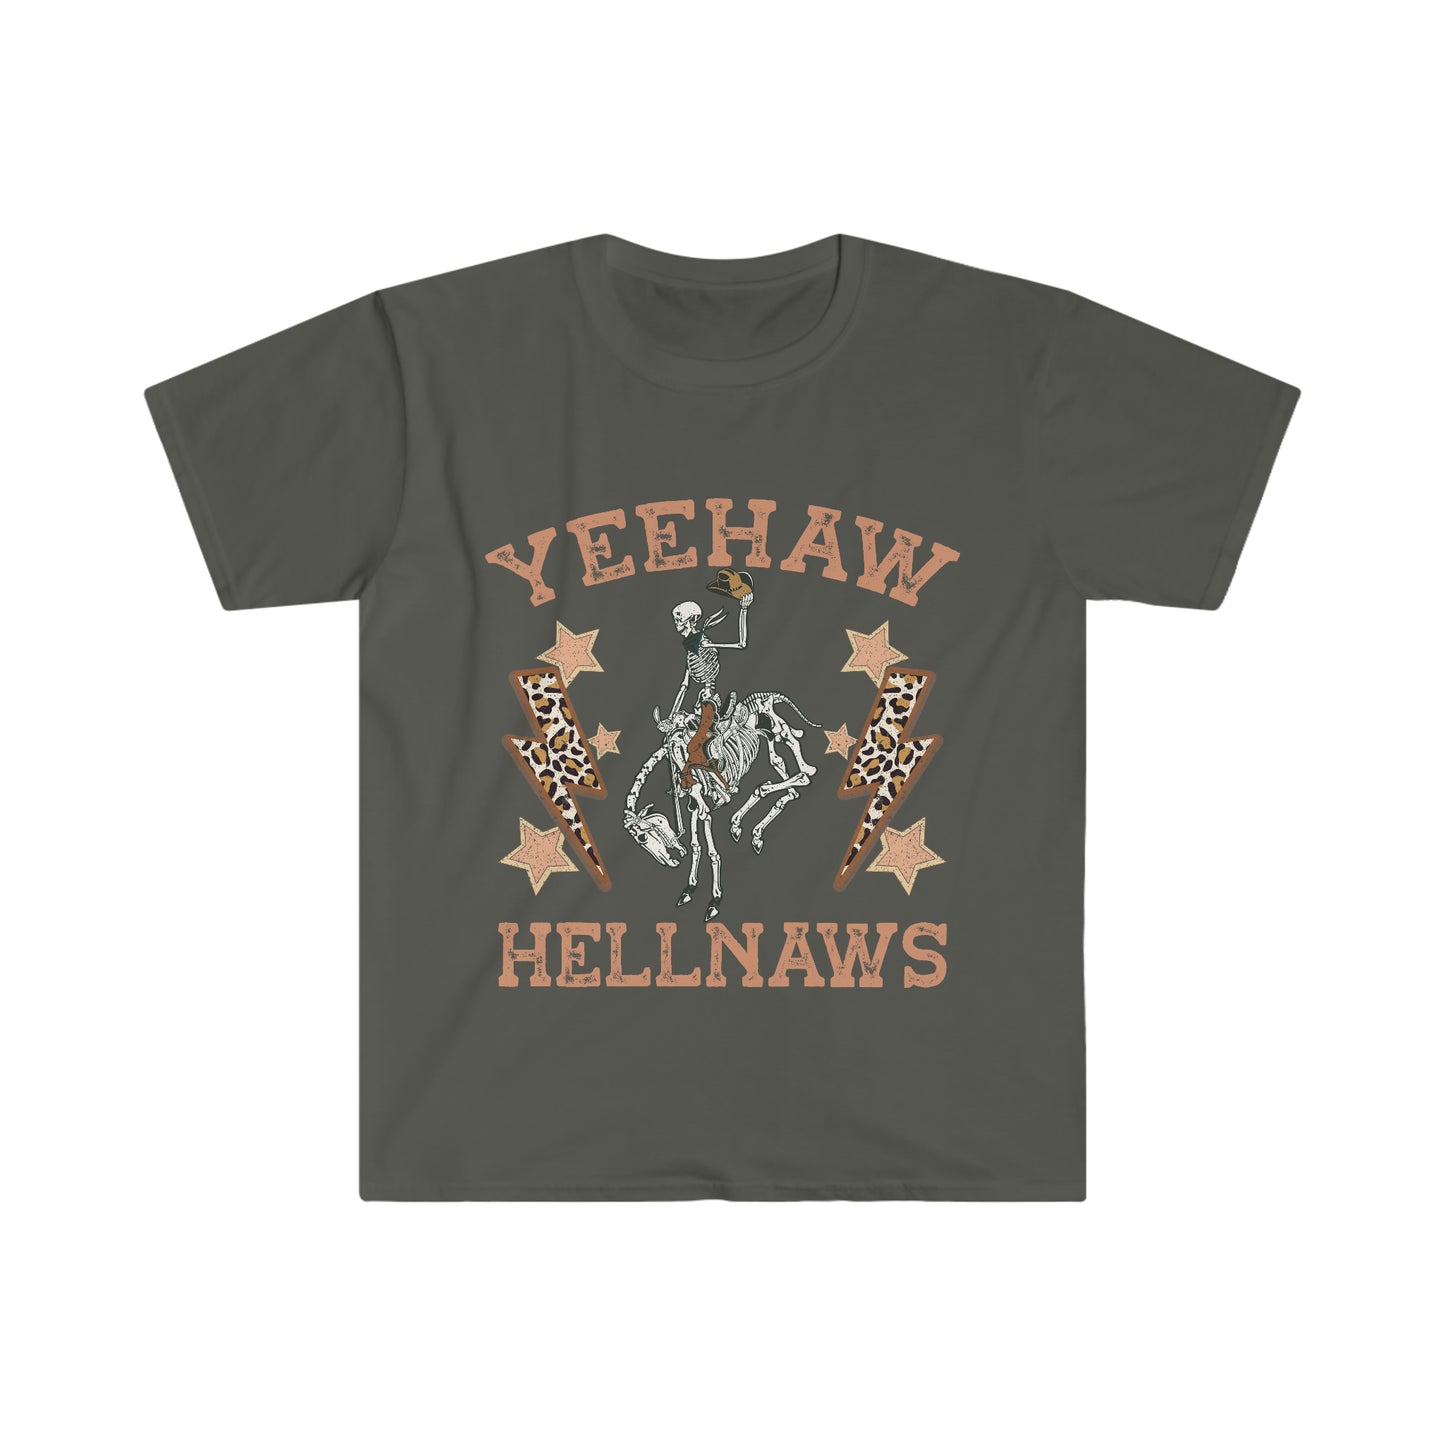 YeeHaw and Hellnaws